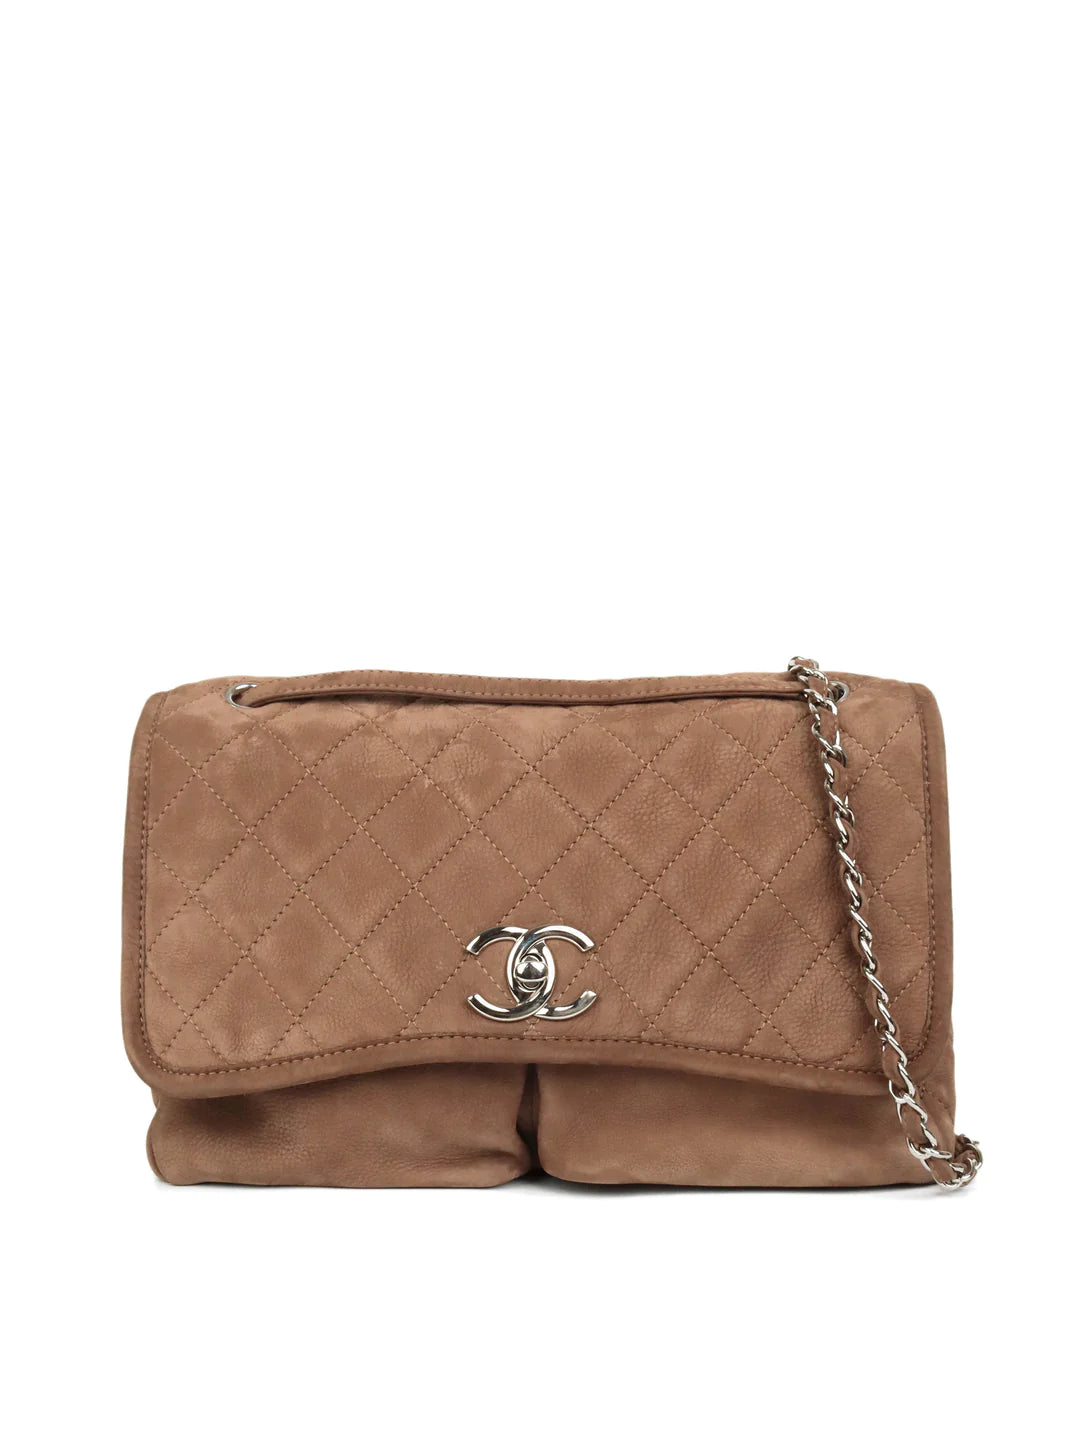 Chanel '12 Brown Nubuck Suede Natural Beauty Messenger Bag SHW